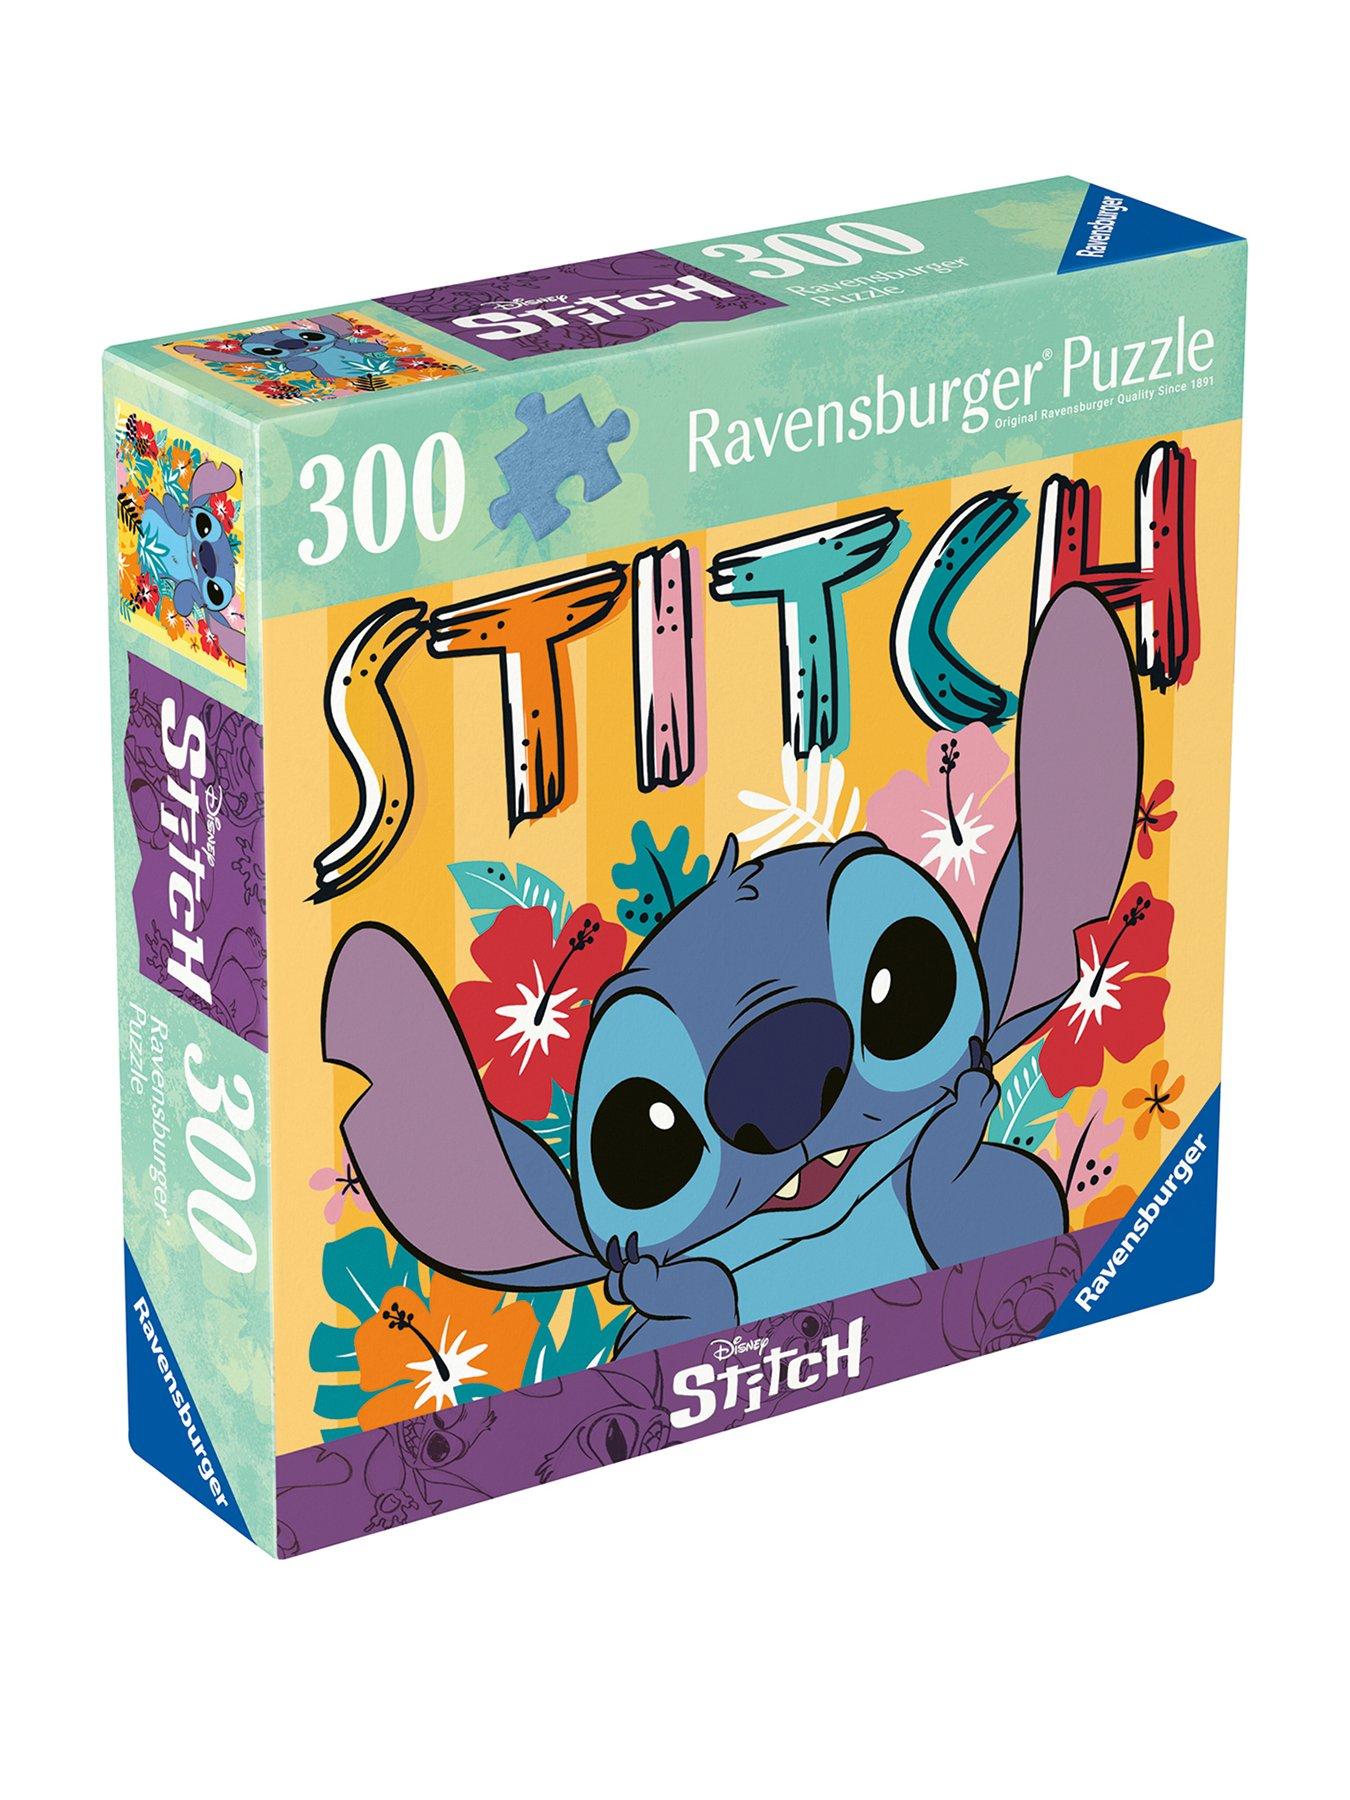 Ravensburger Stitch 4 x 100 Piece Jigsaw Puzzle Bumper Pack